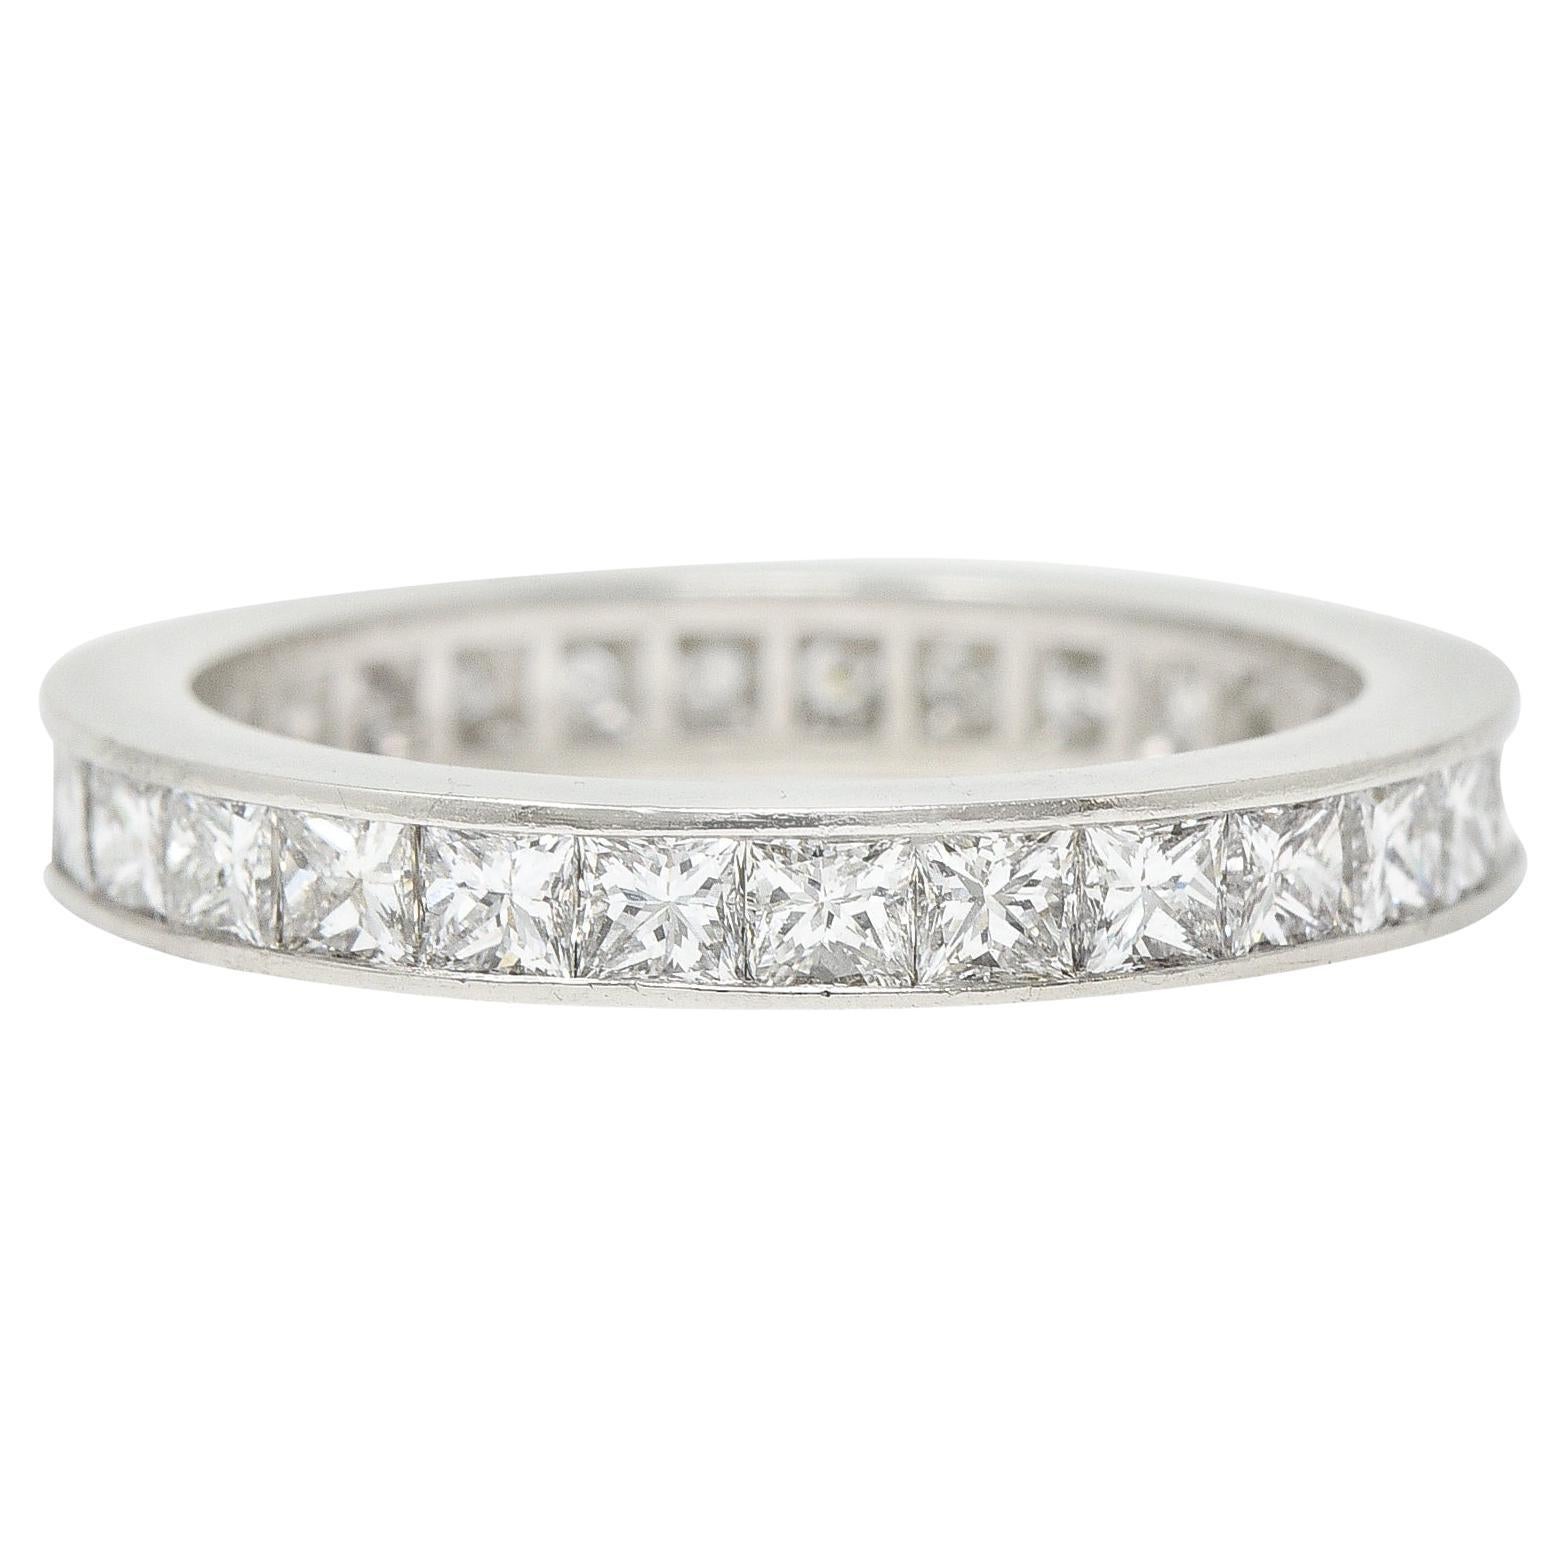 Contemporary 2.70 Carats Princess Cut Diamond Platinum Wedding Band Ring